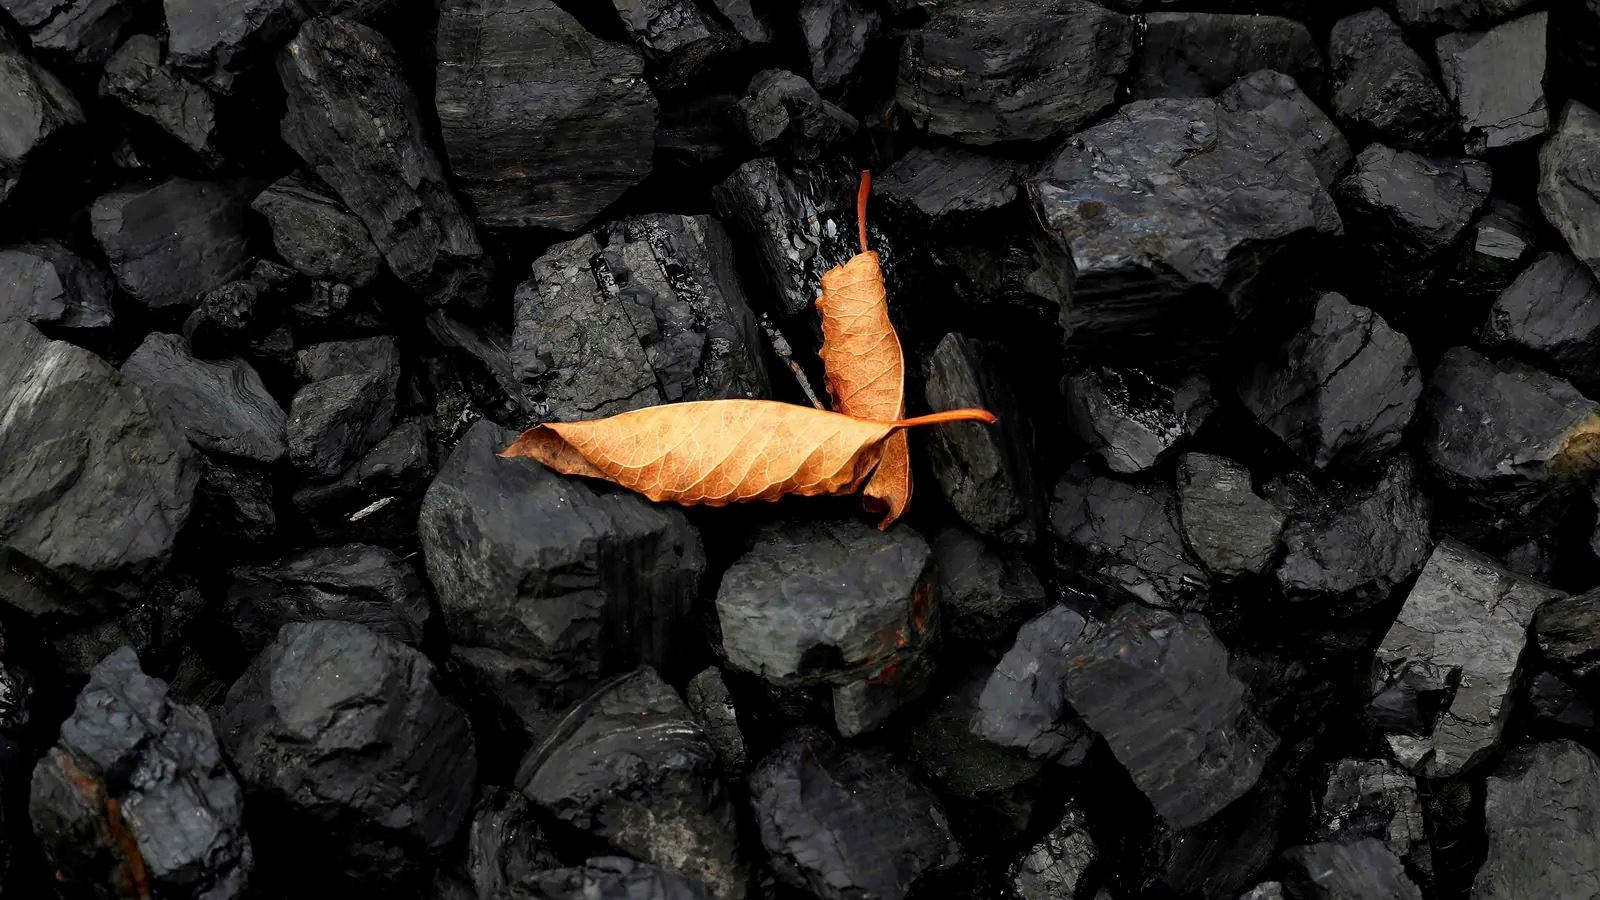 China's coking coal imports increased